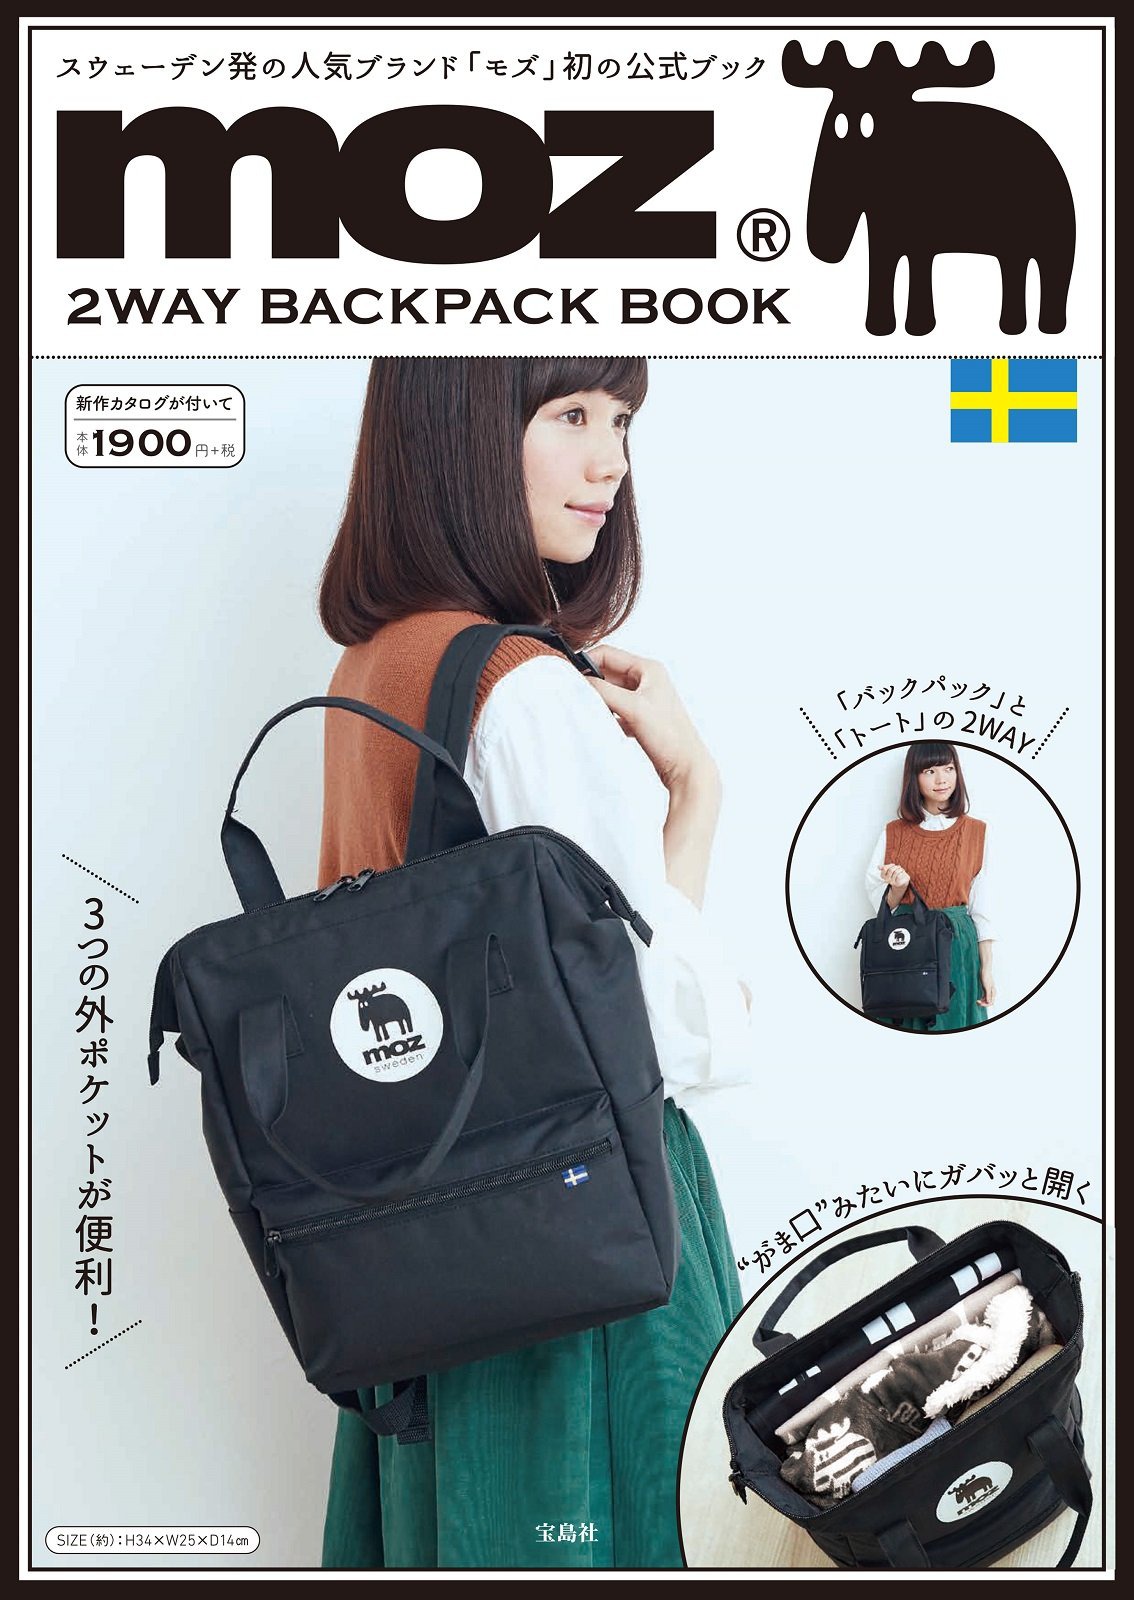 Moz 2way Backpack Book 付録 Moz モズ 2wayバックパック 雑誌付録ダイアリー 発売予定 レビューブログ